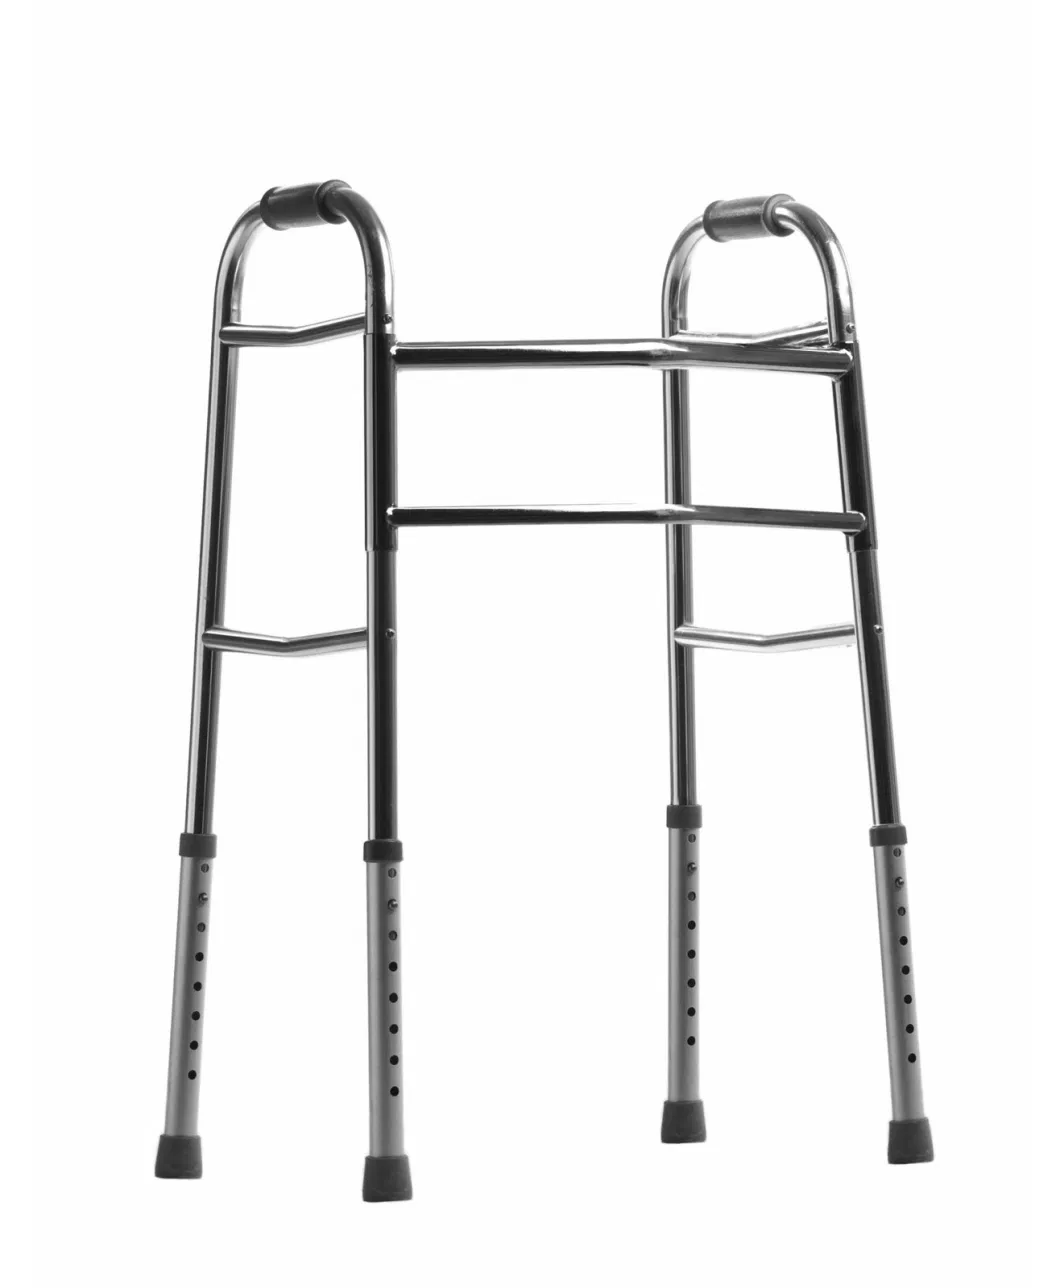 Lightweight Folding Mobility Walker Bme811 for Elderly